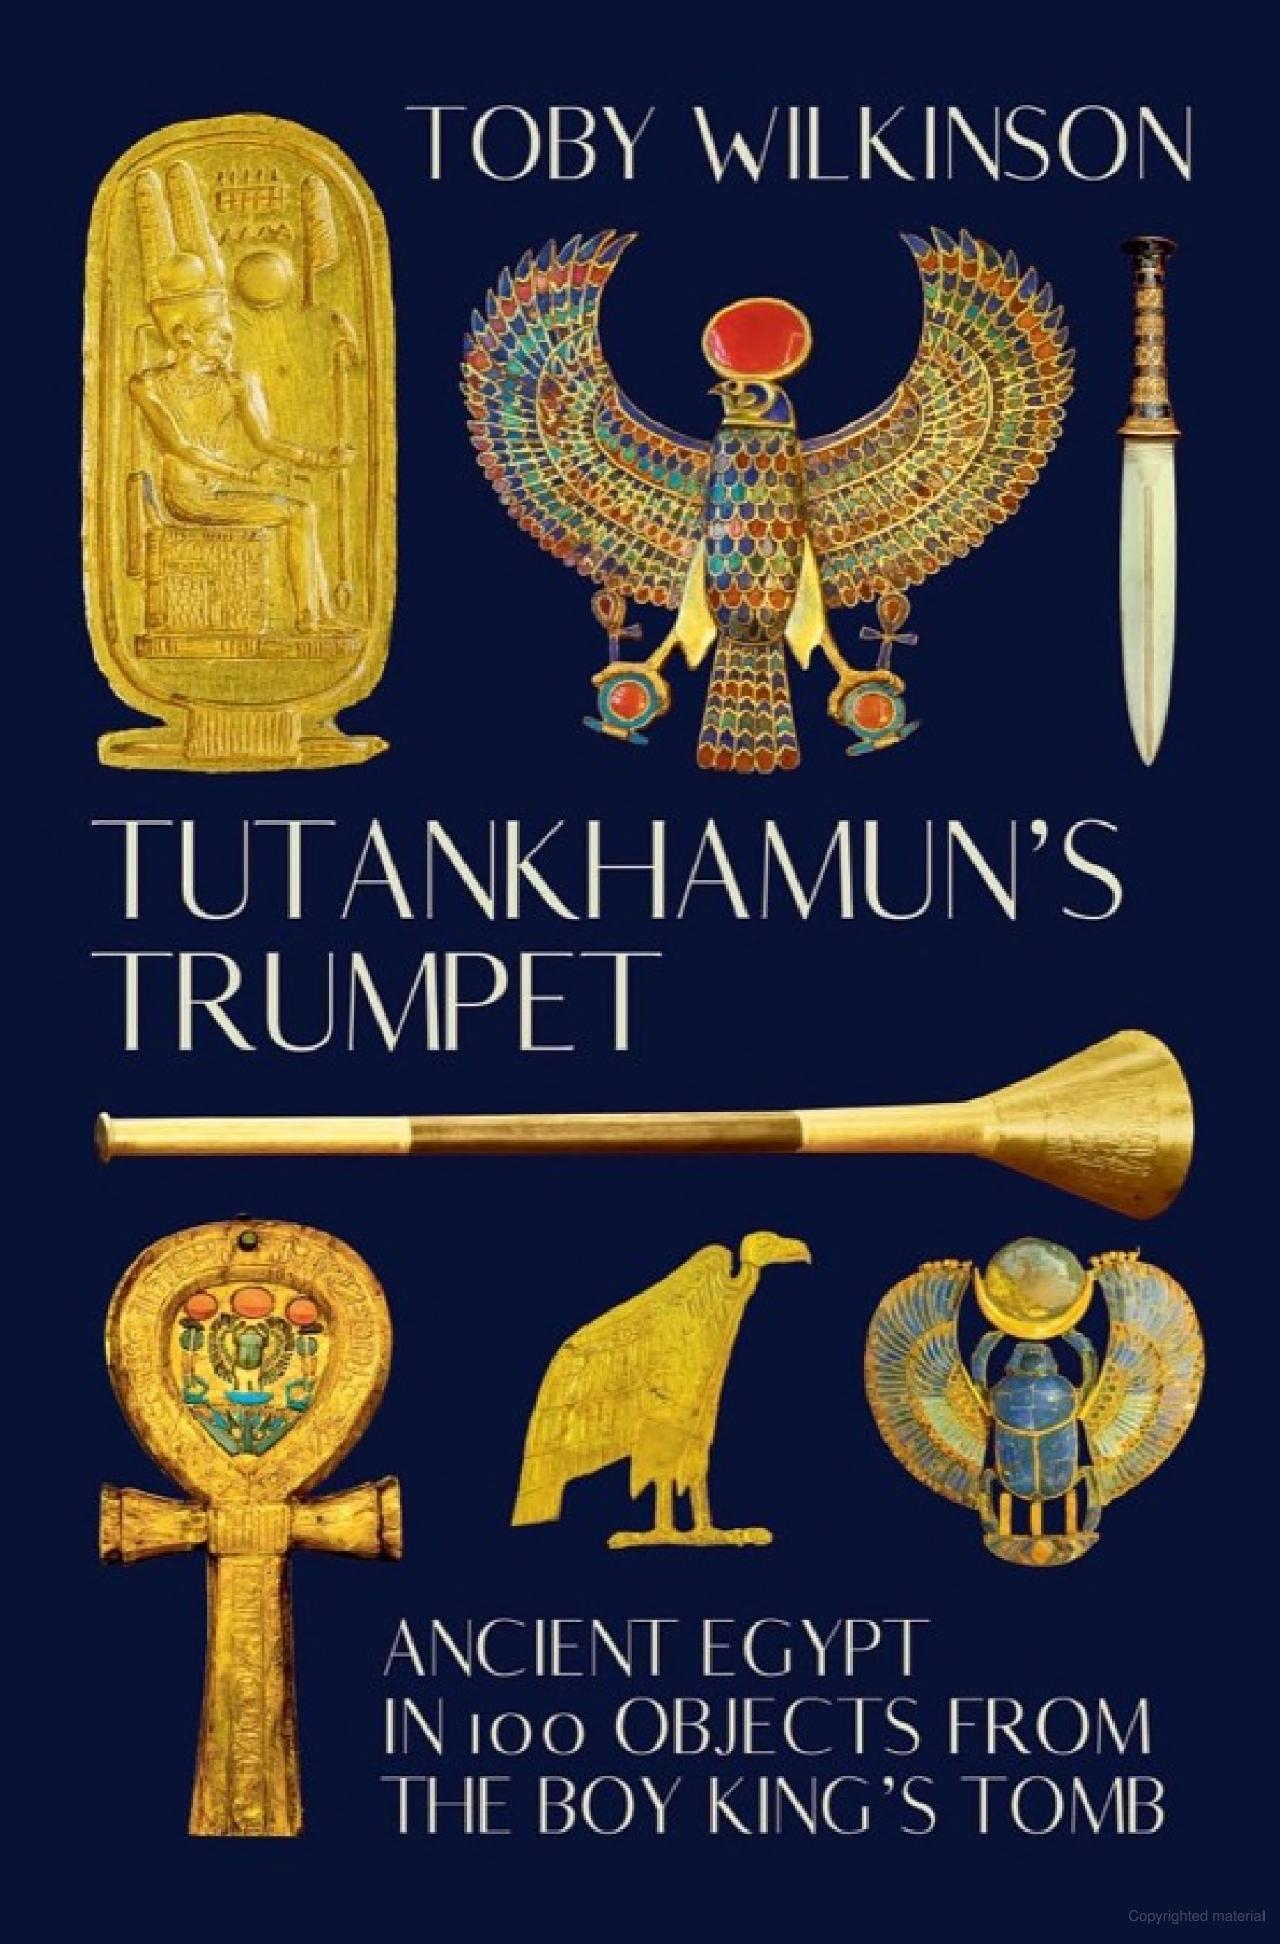 Toby Wilkinson: Tutankhamun's Trumpet (2022, Norton & Company Limited, W. W.)